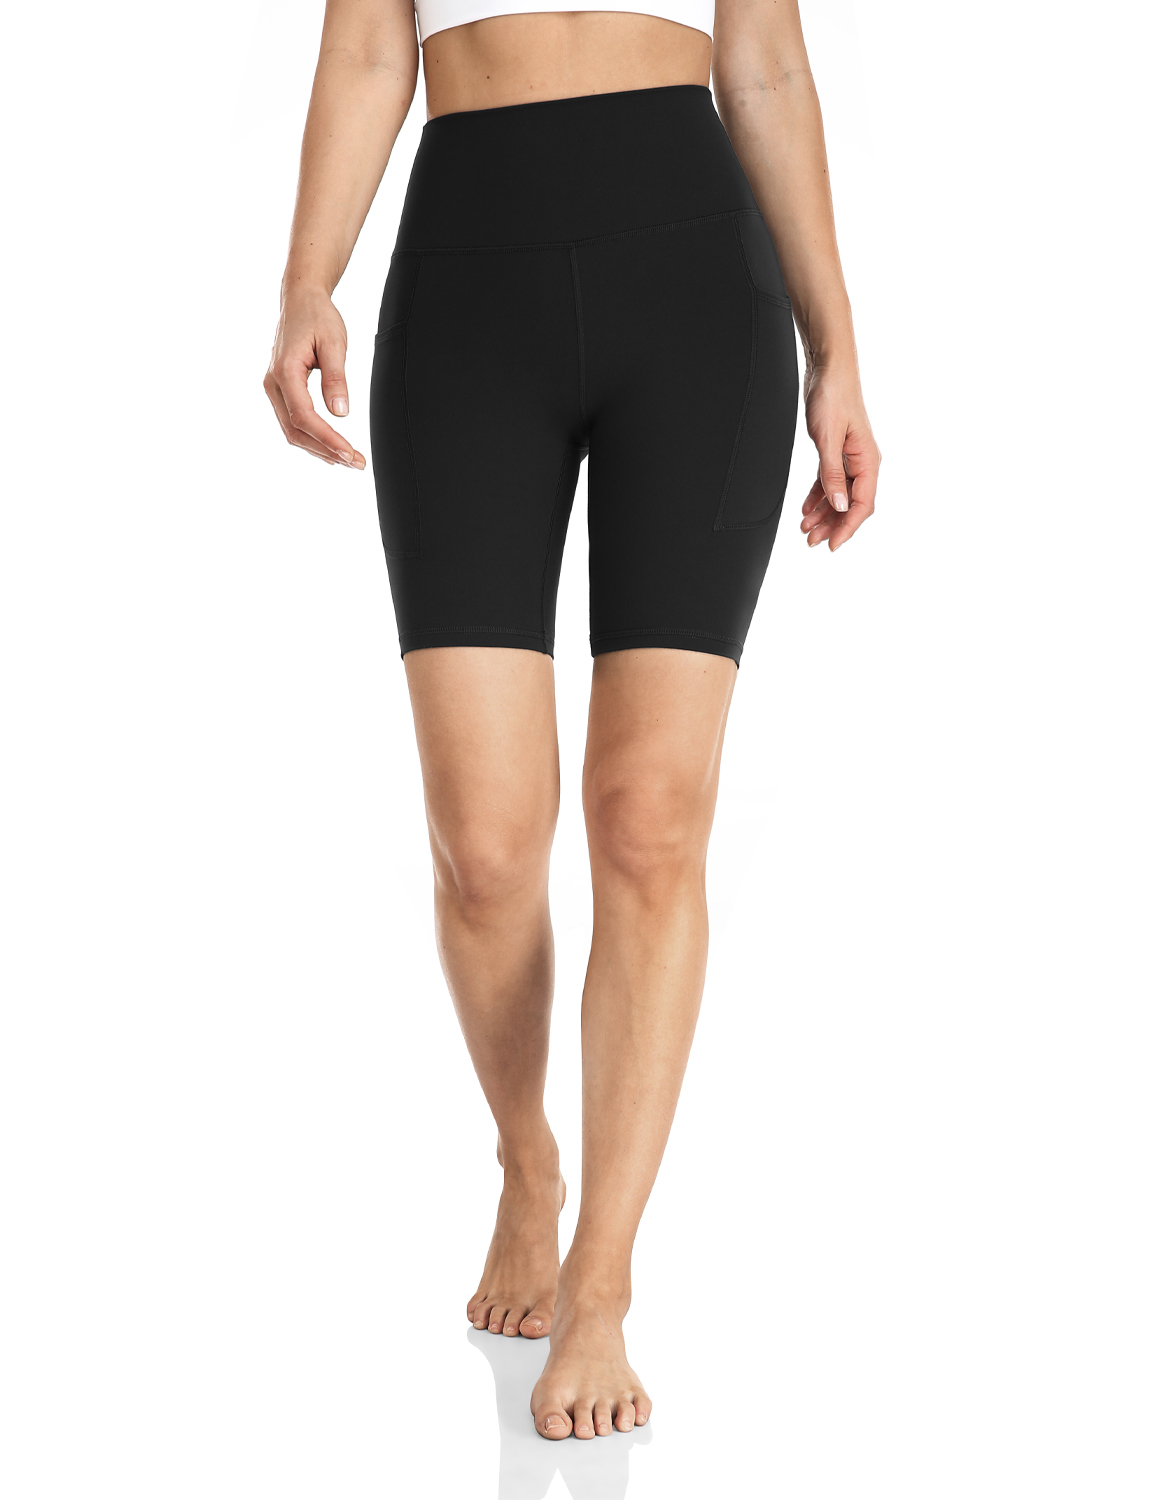 Sunzel 8 / 5 / 3 Biker Shorts for Women with Pockets, High Waisted Yoga  Workout Shorts 